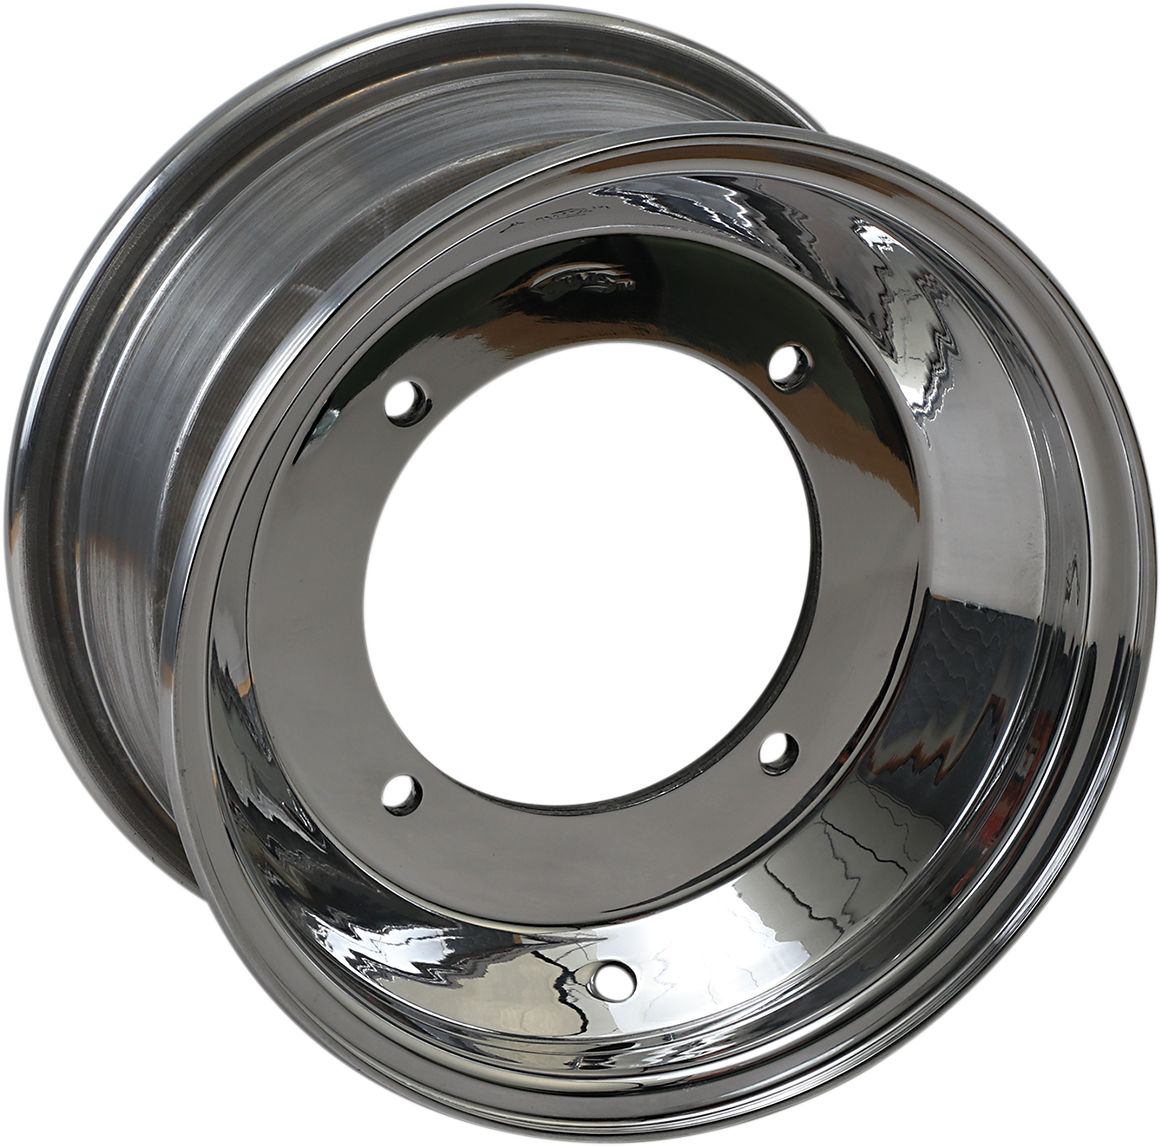 AMS [0232-0108] Standard-Lip Spun Aluminum Wheel 10x5 - 3+2 Offset - 4/156 Polis...cont'd | Wheel Spun 10X5 4/156 3+2